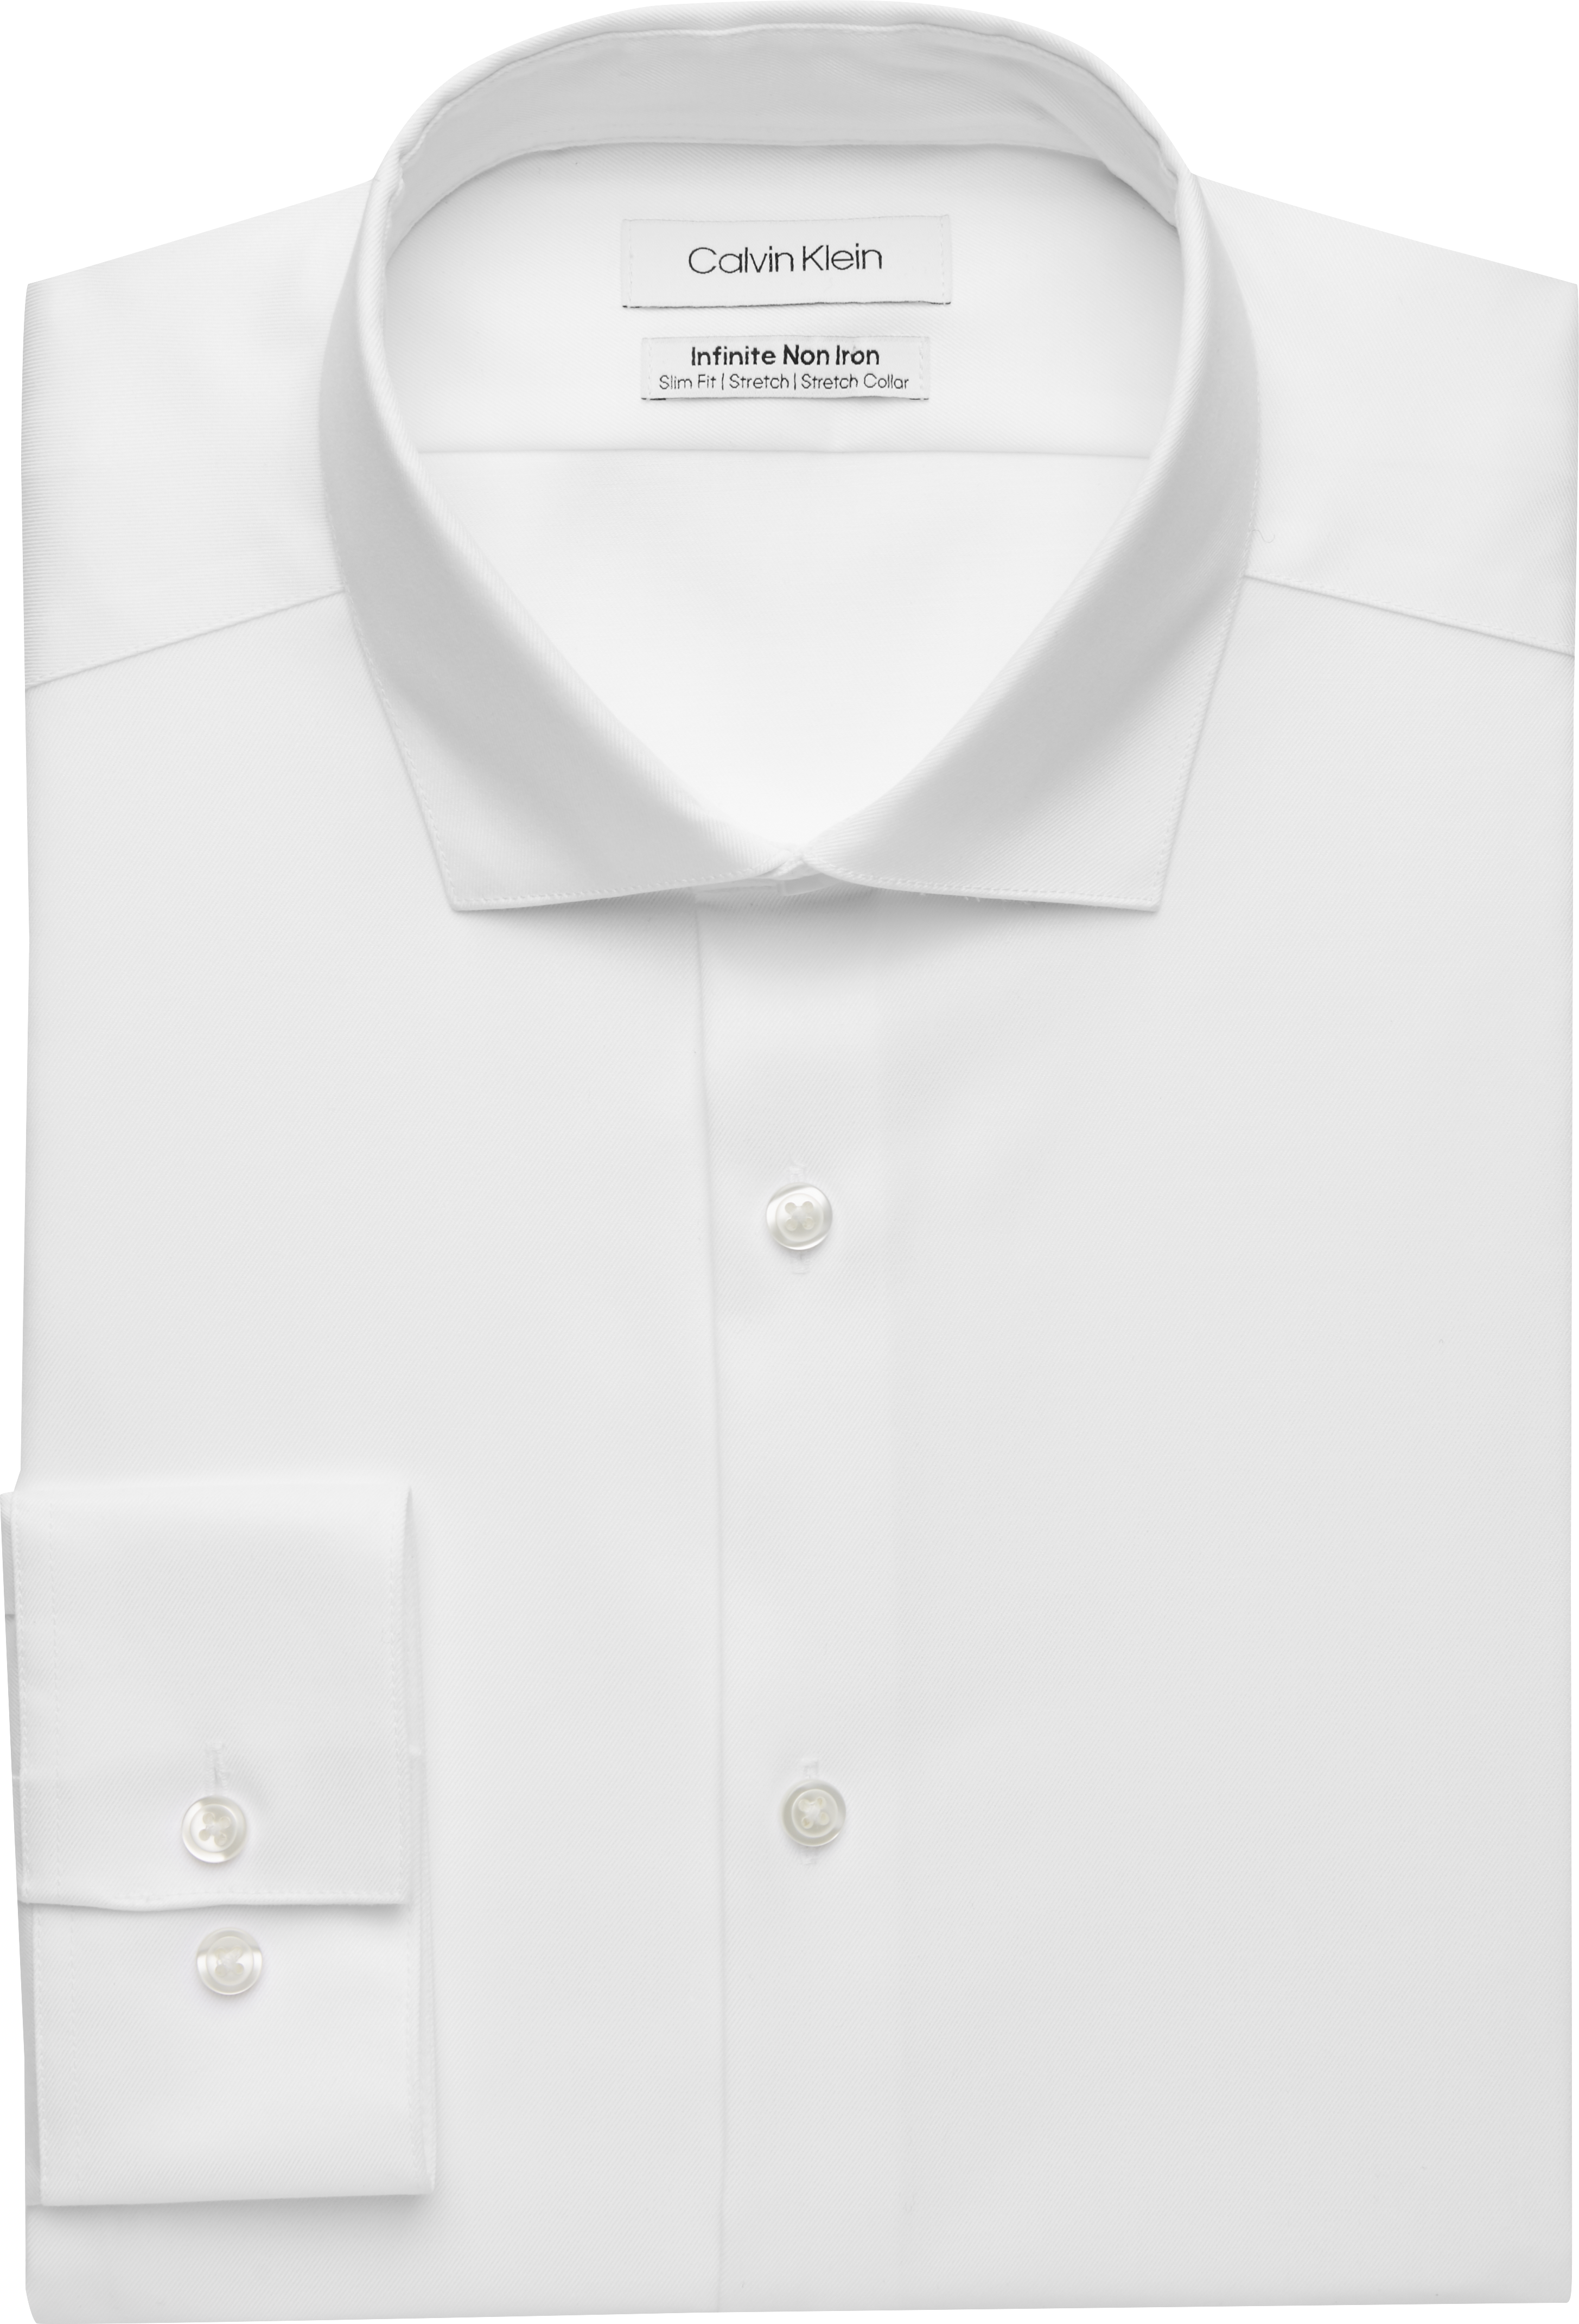 calvin klein white dress shirt